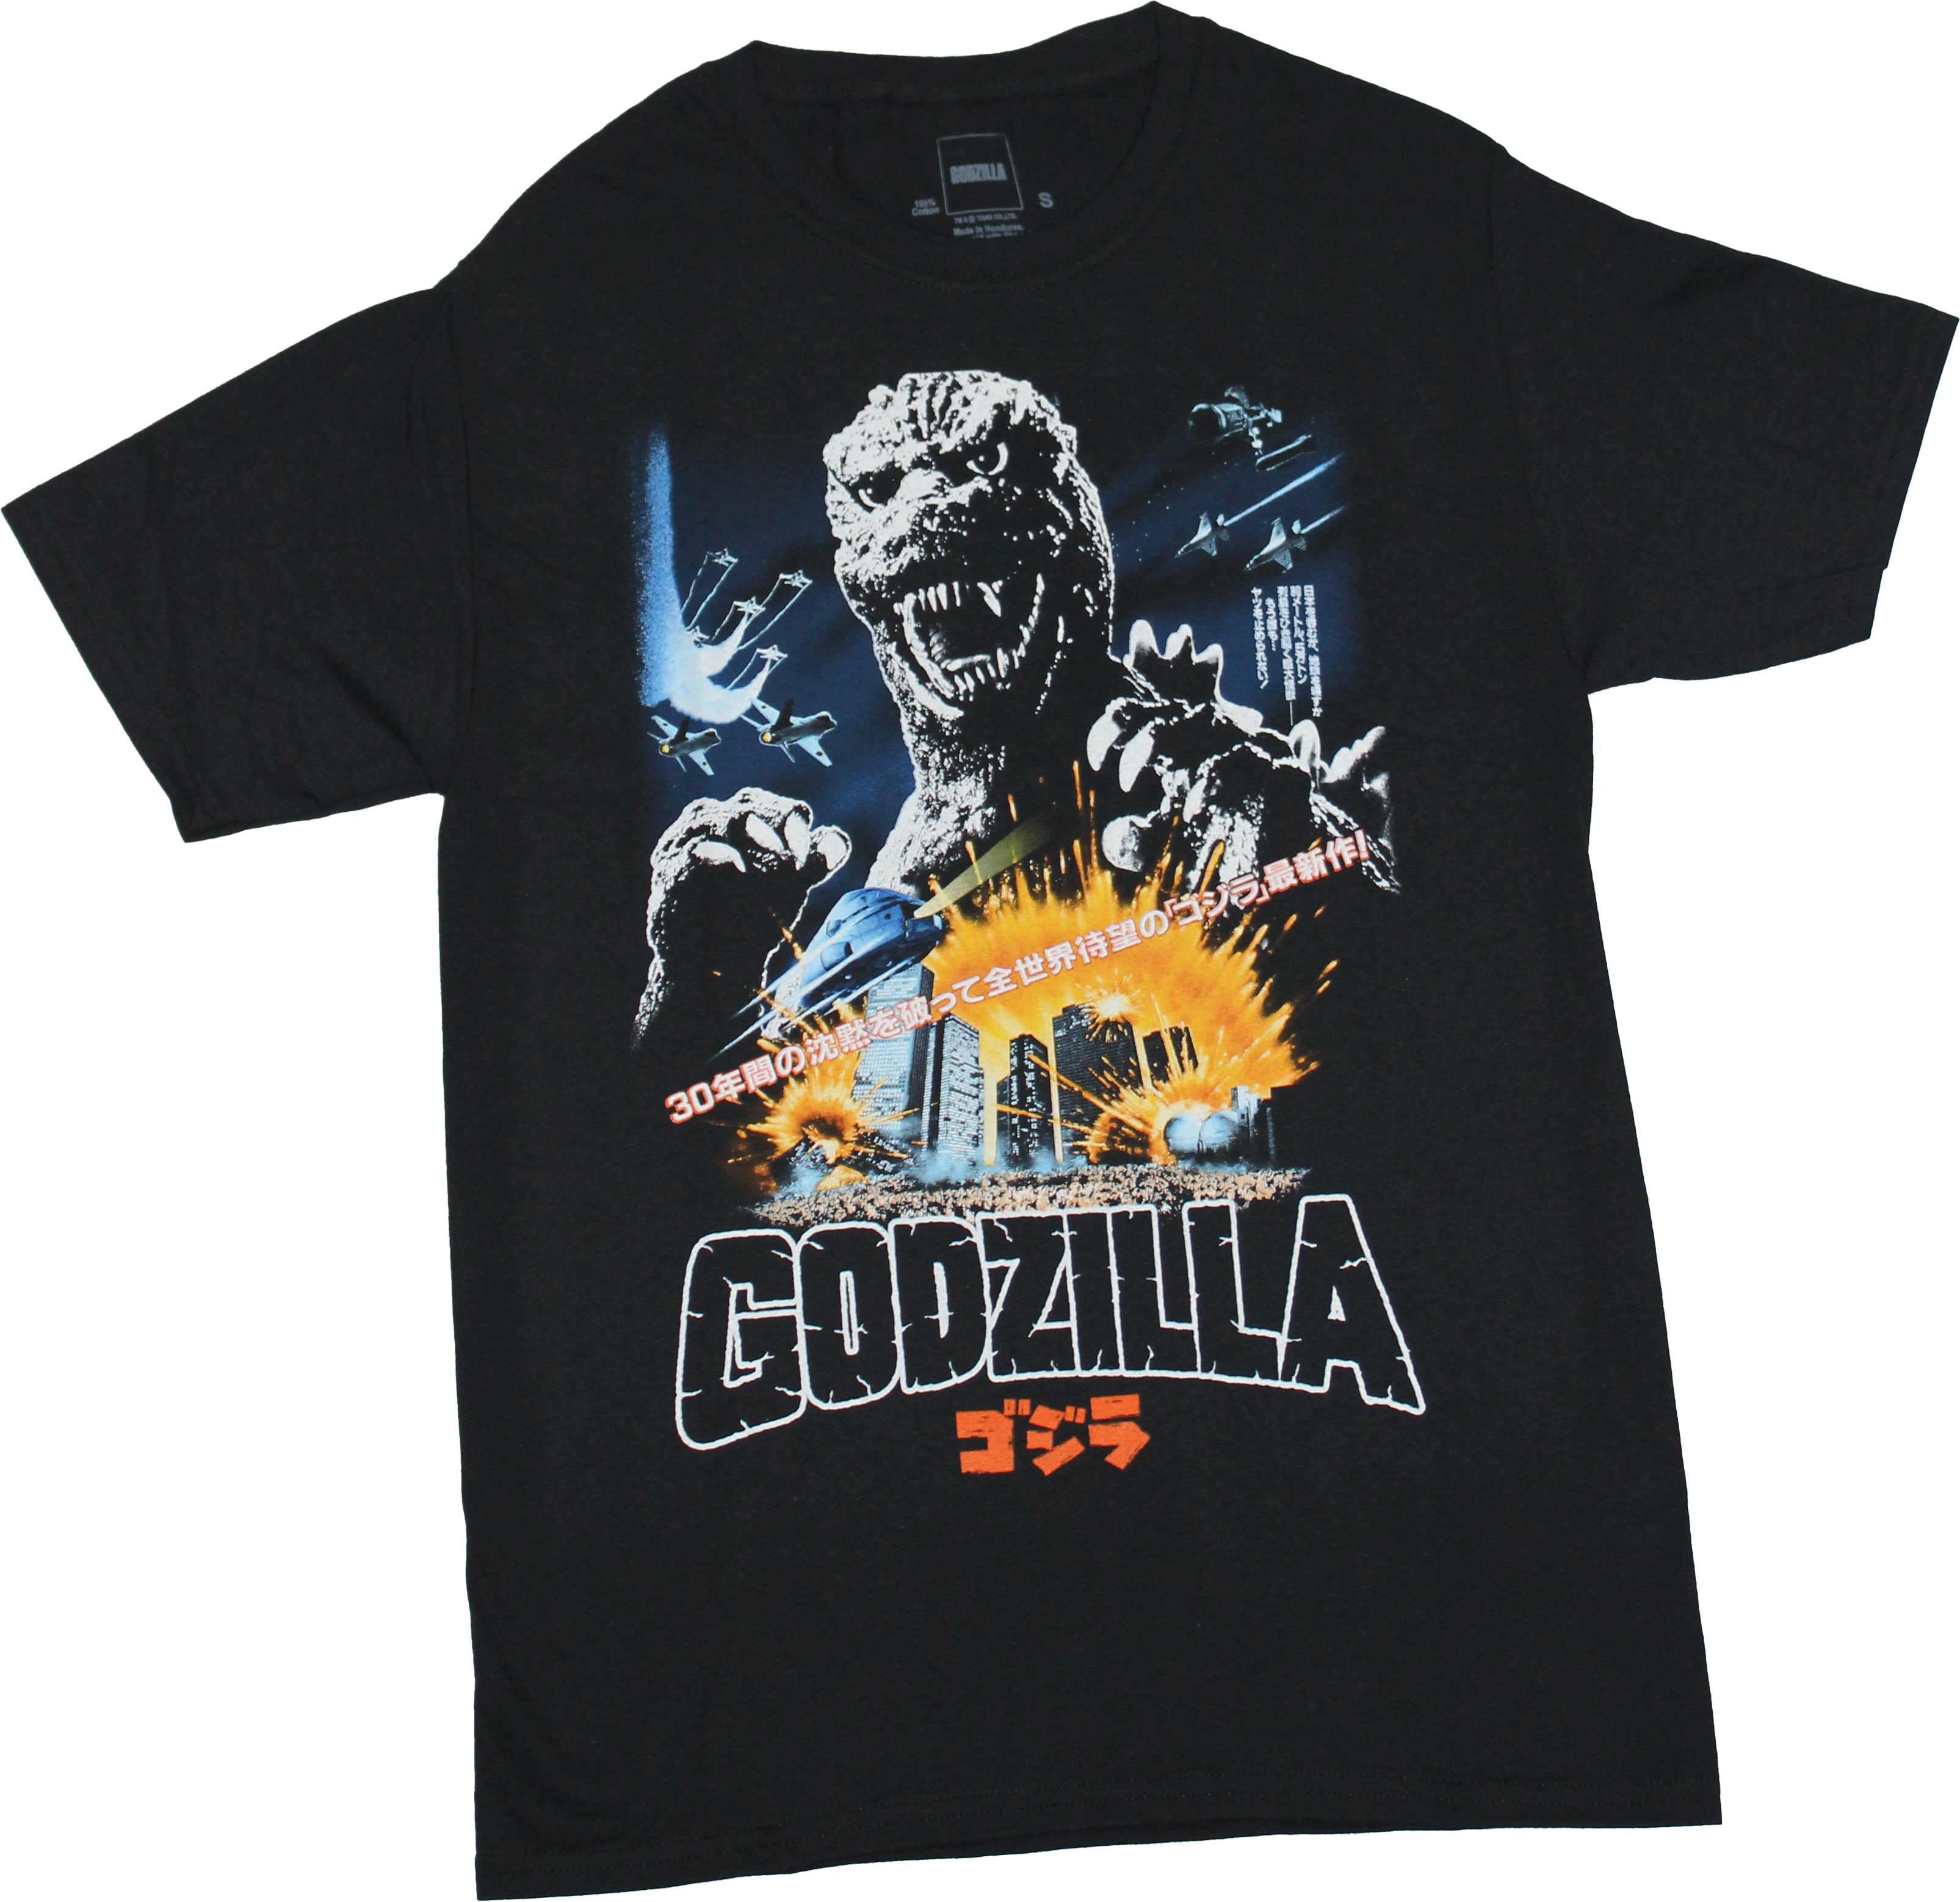 Godzilla Mens T-Shirt - 1985 Movie Poster Art